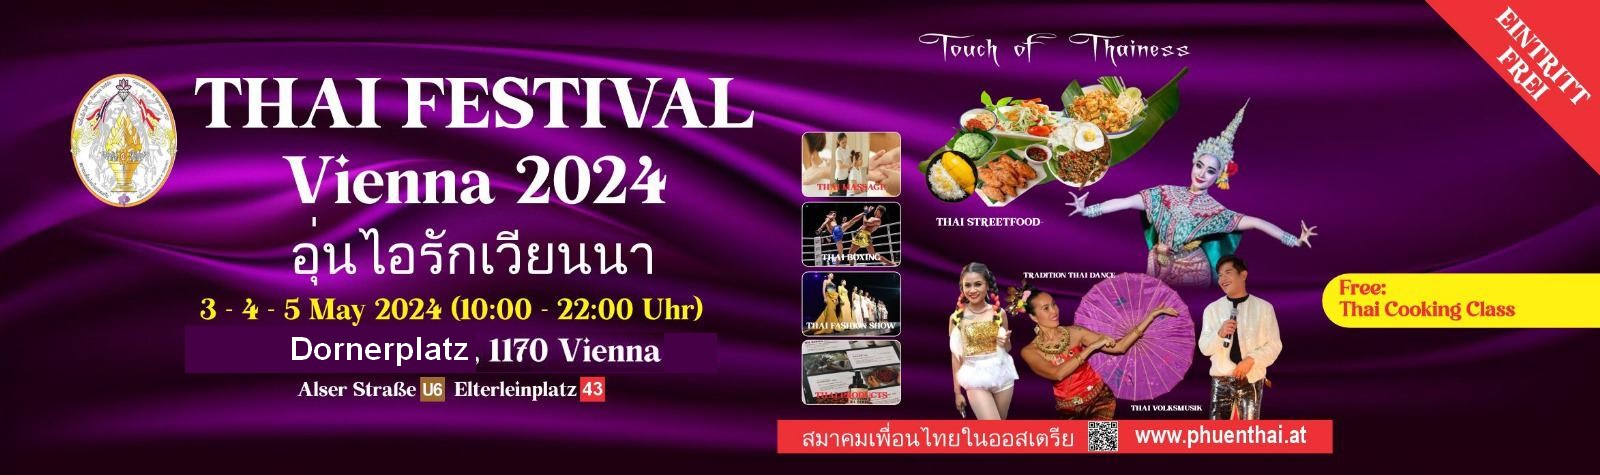 Thai Festival - Bilder - phuenthai.at